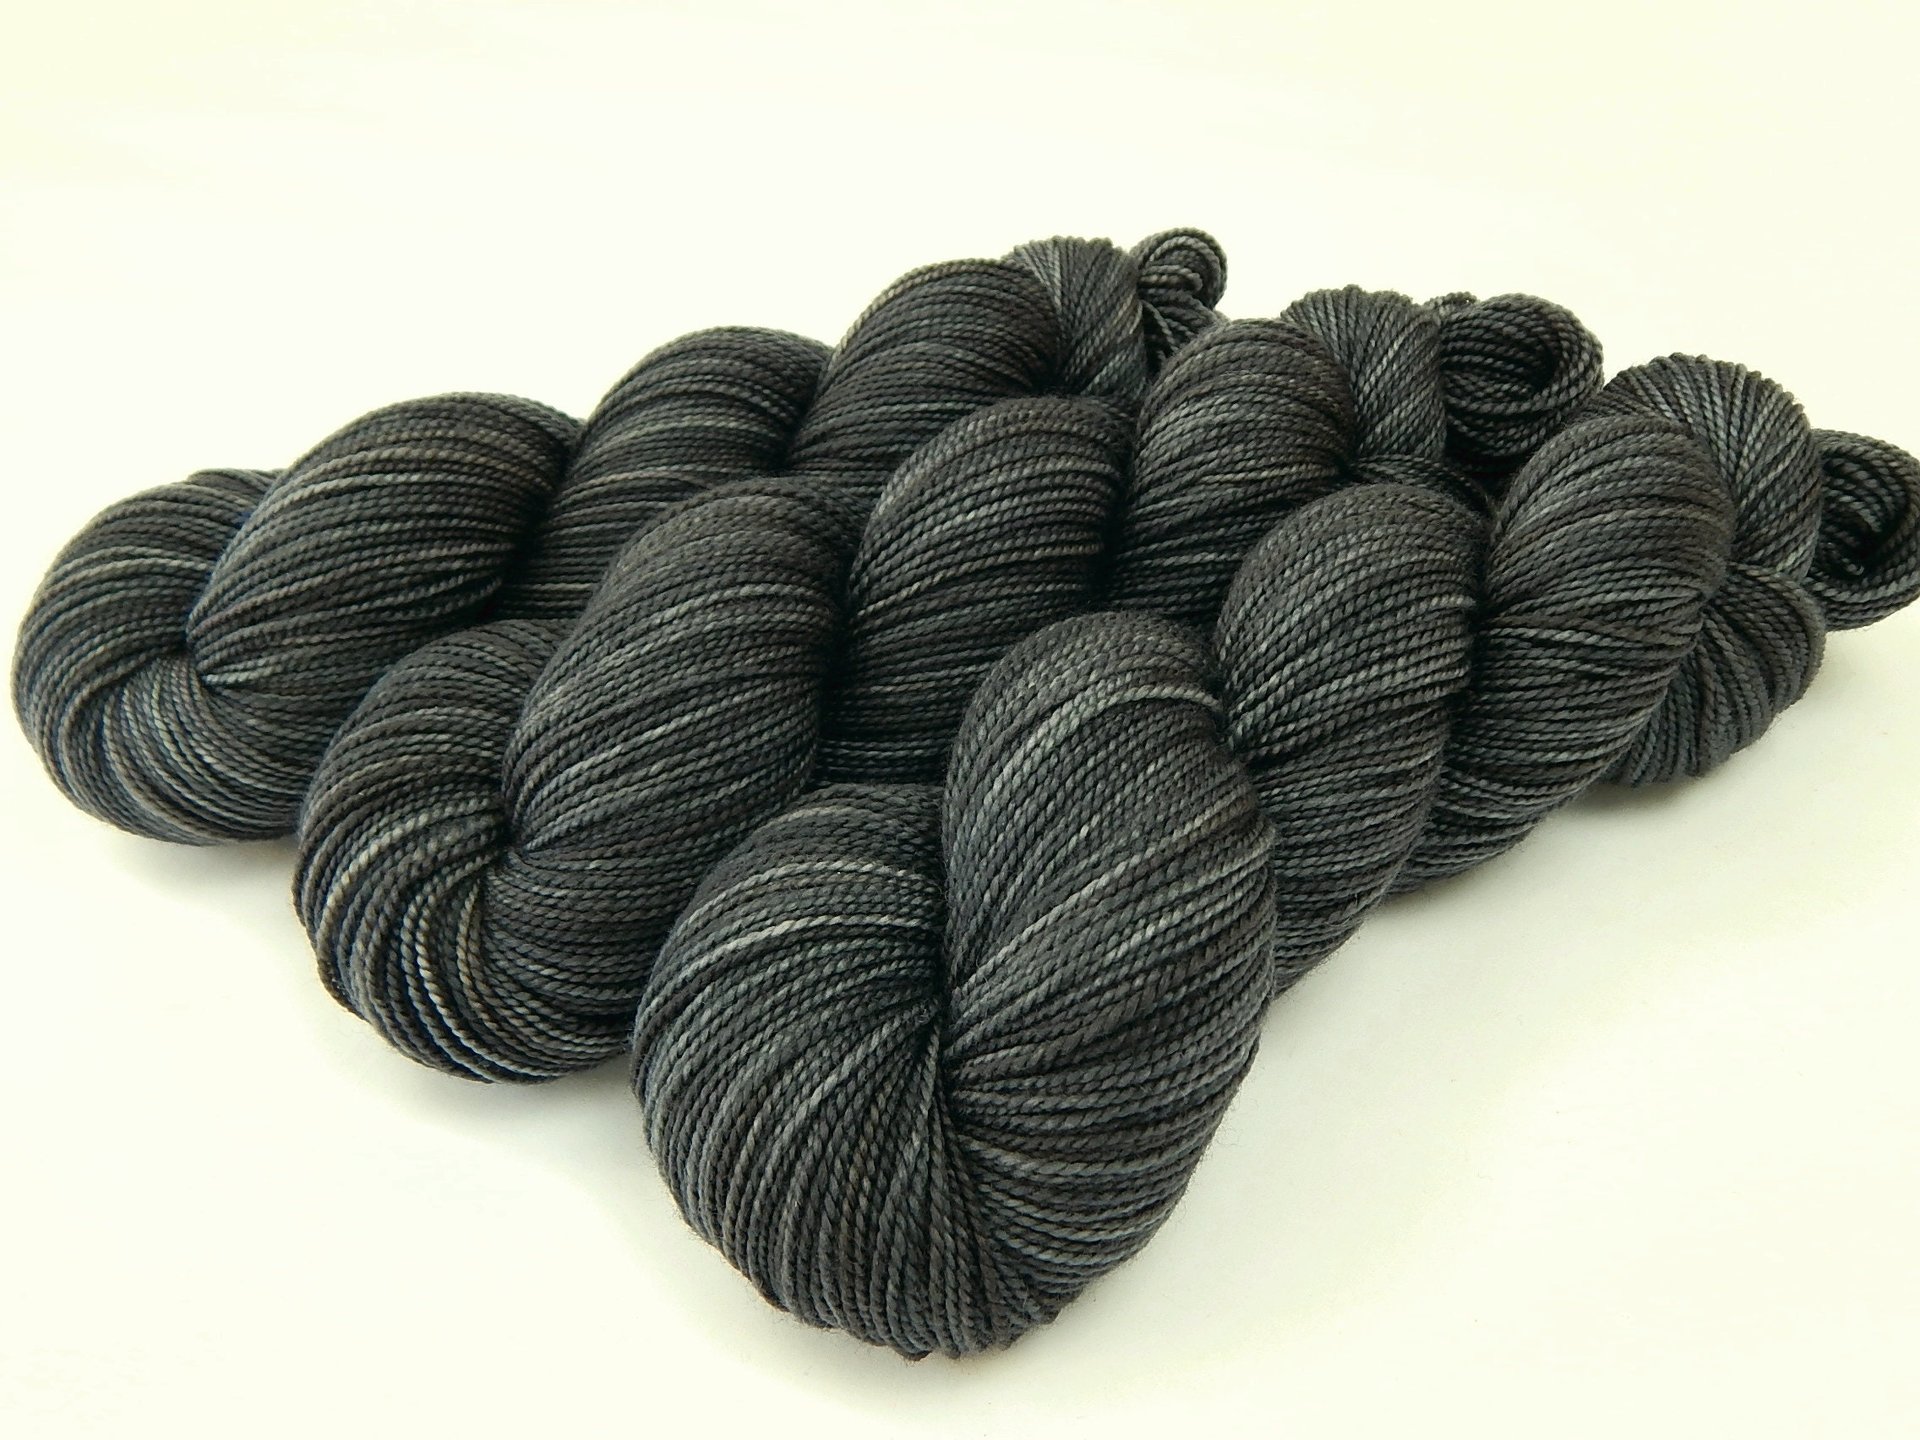 Hand Dyed Yarn, Sock Fingering 100% Superwash Merino Wool - Slate Grey Tonal - Charcoal Gray Indie Dyed Yarn, Knitting Crochet Sock Yarn